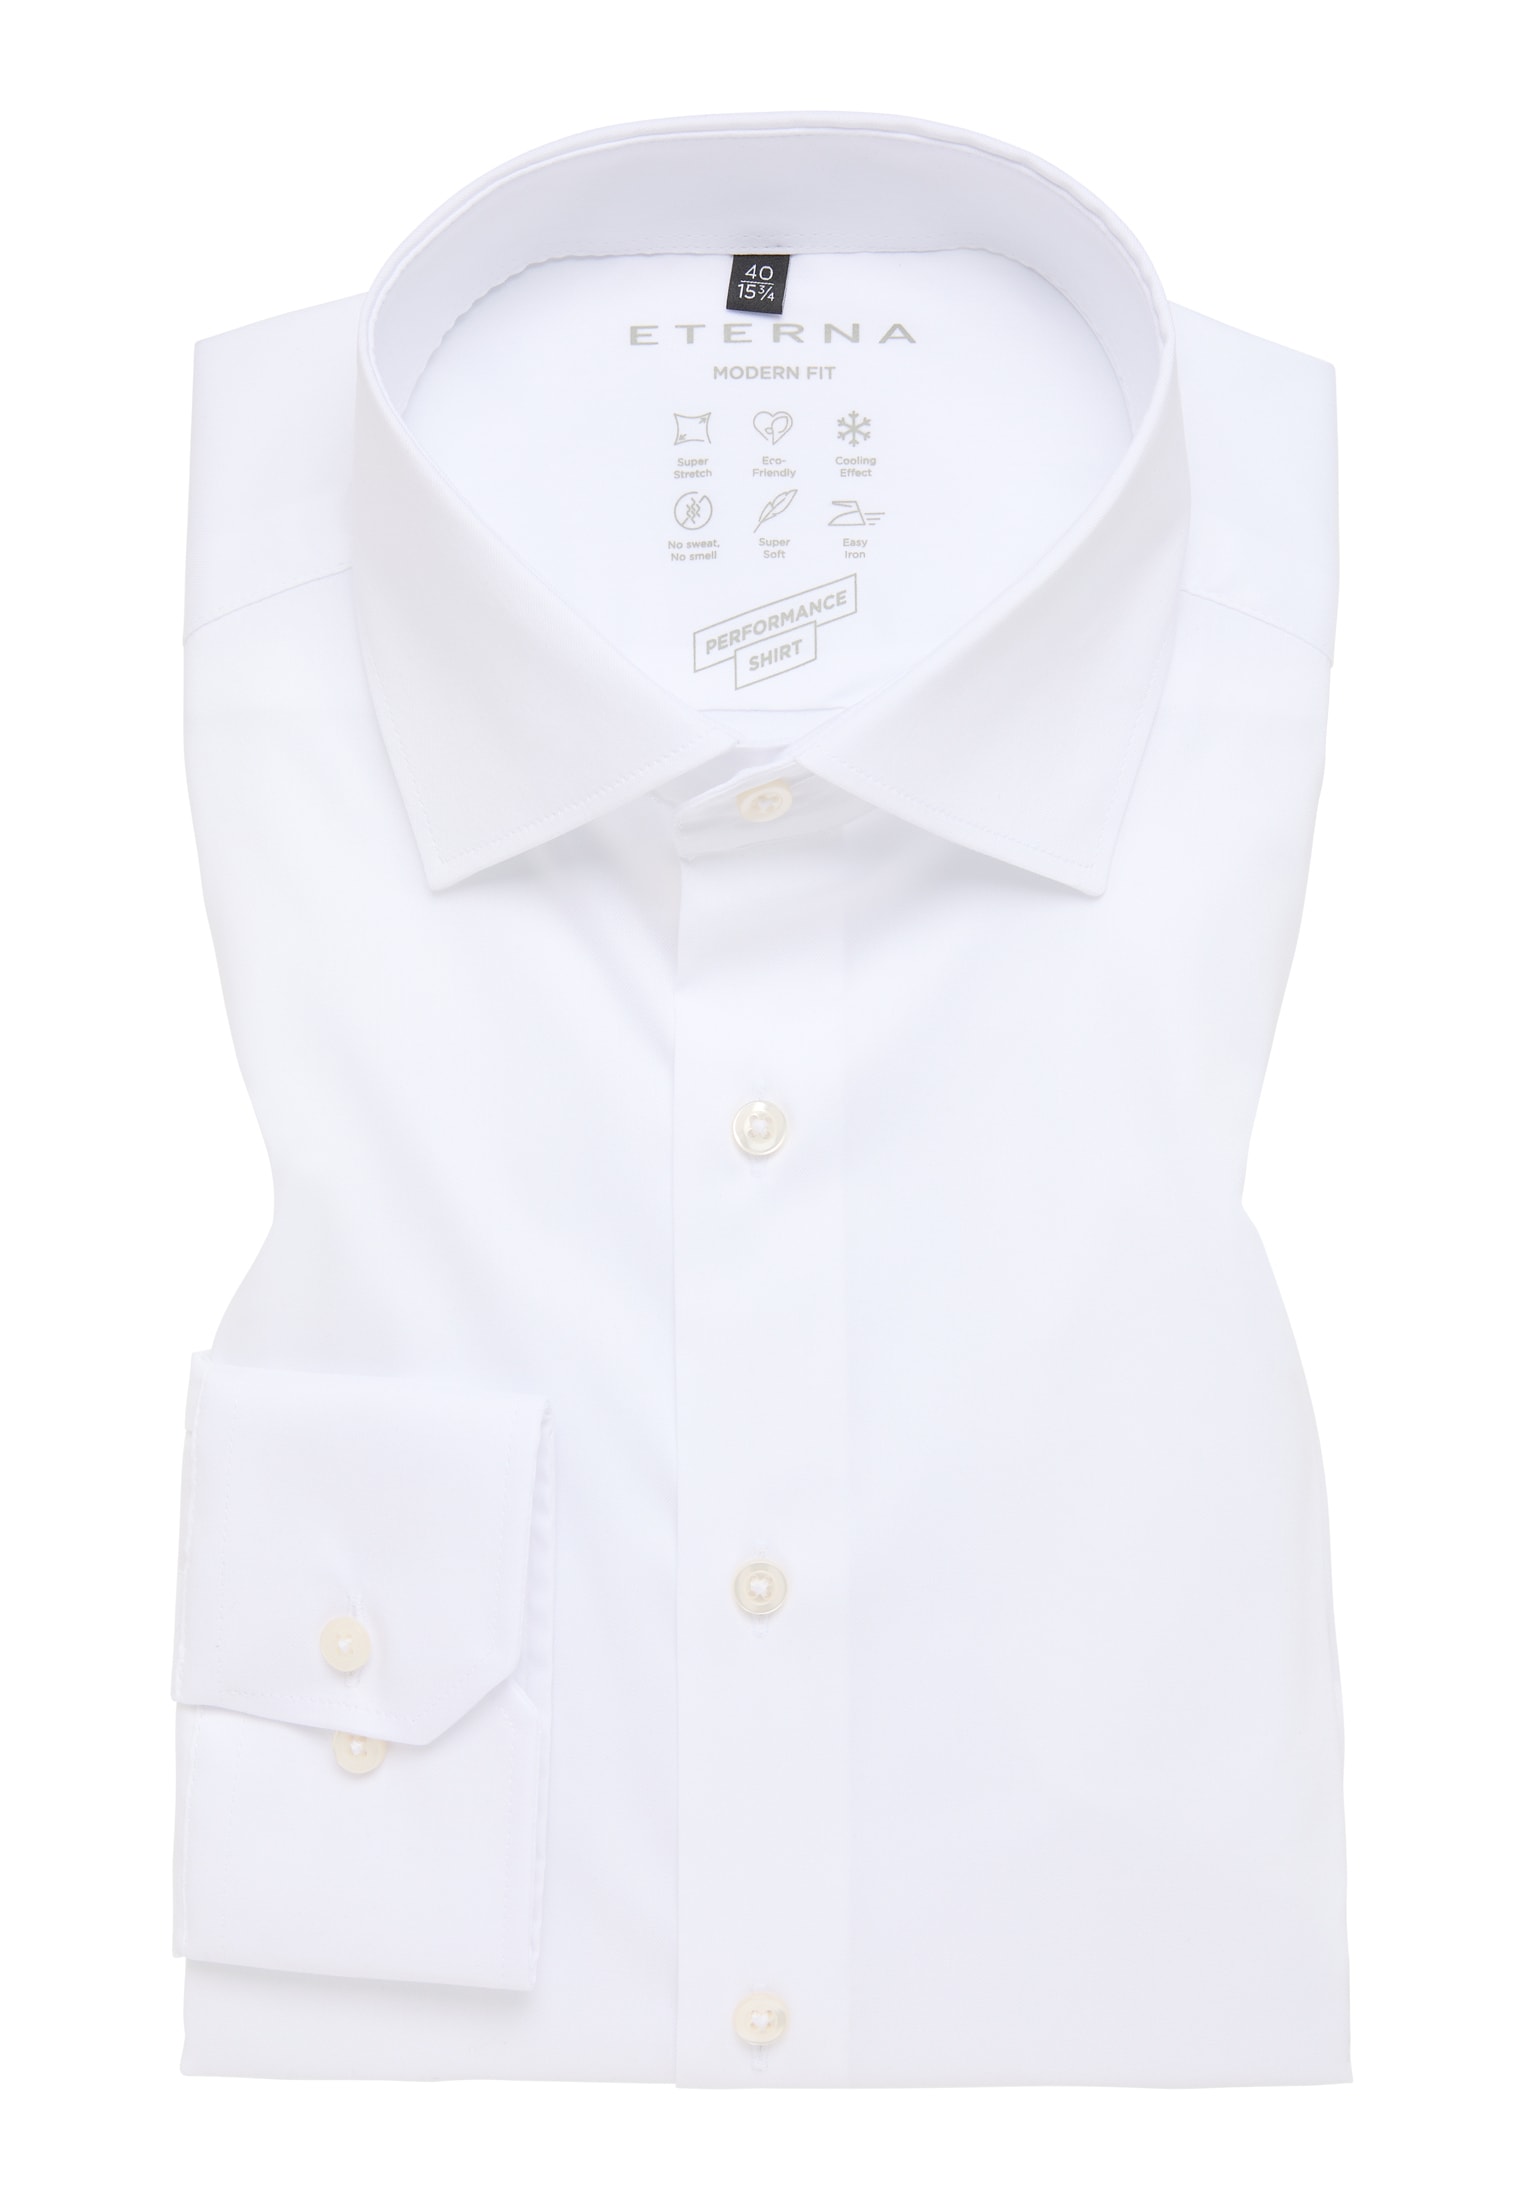 MODERN FIT Performance Shirt Langarm weiß 40 in | | 1SH02224-00-01-40-1/1 weiß | | unifarben